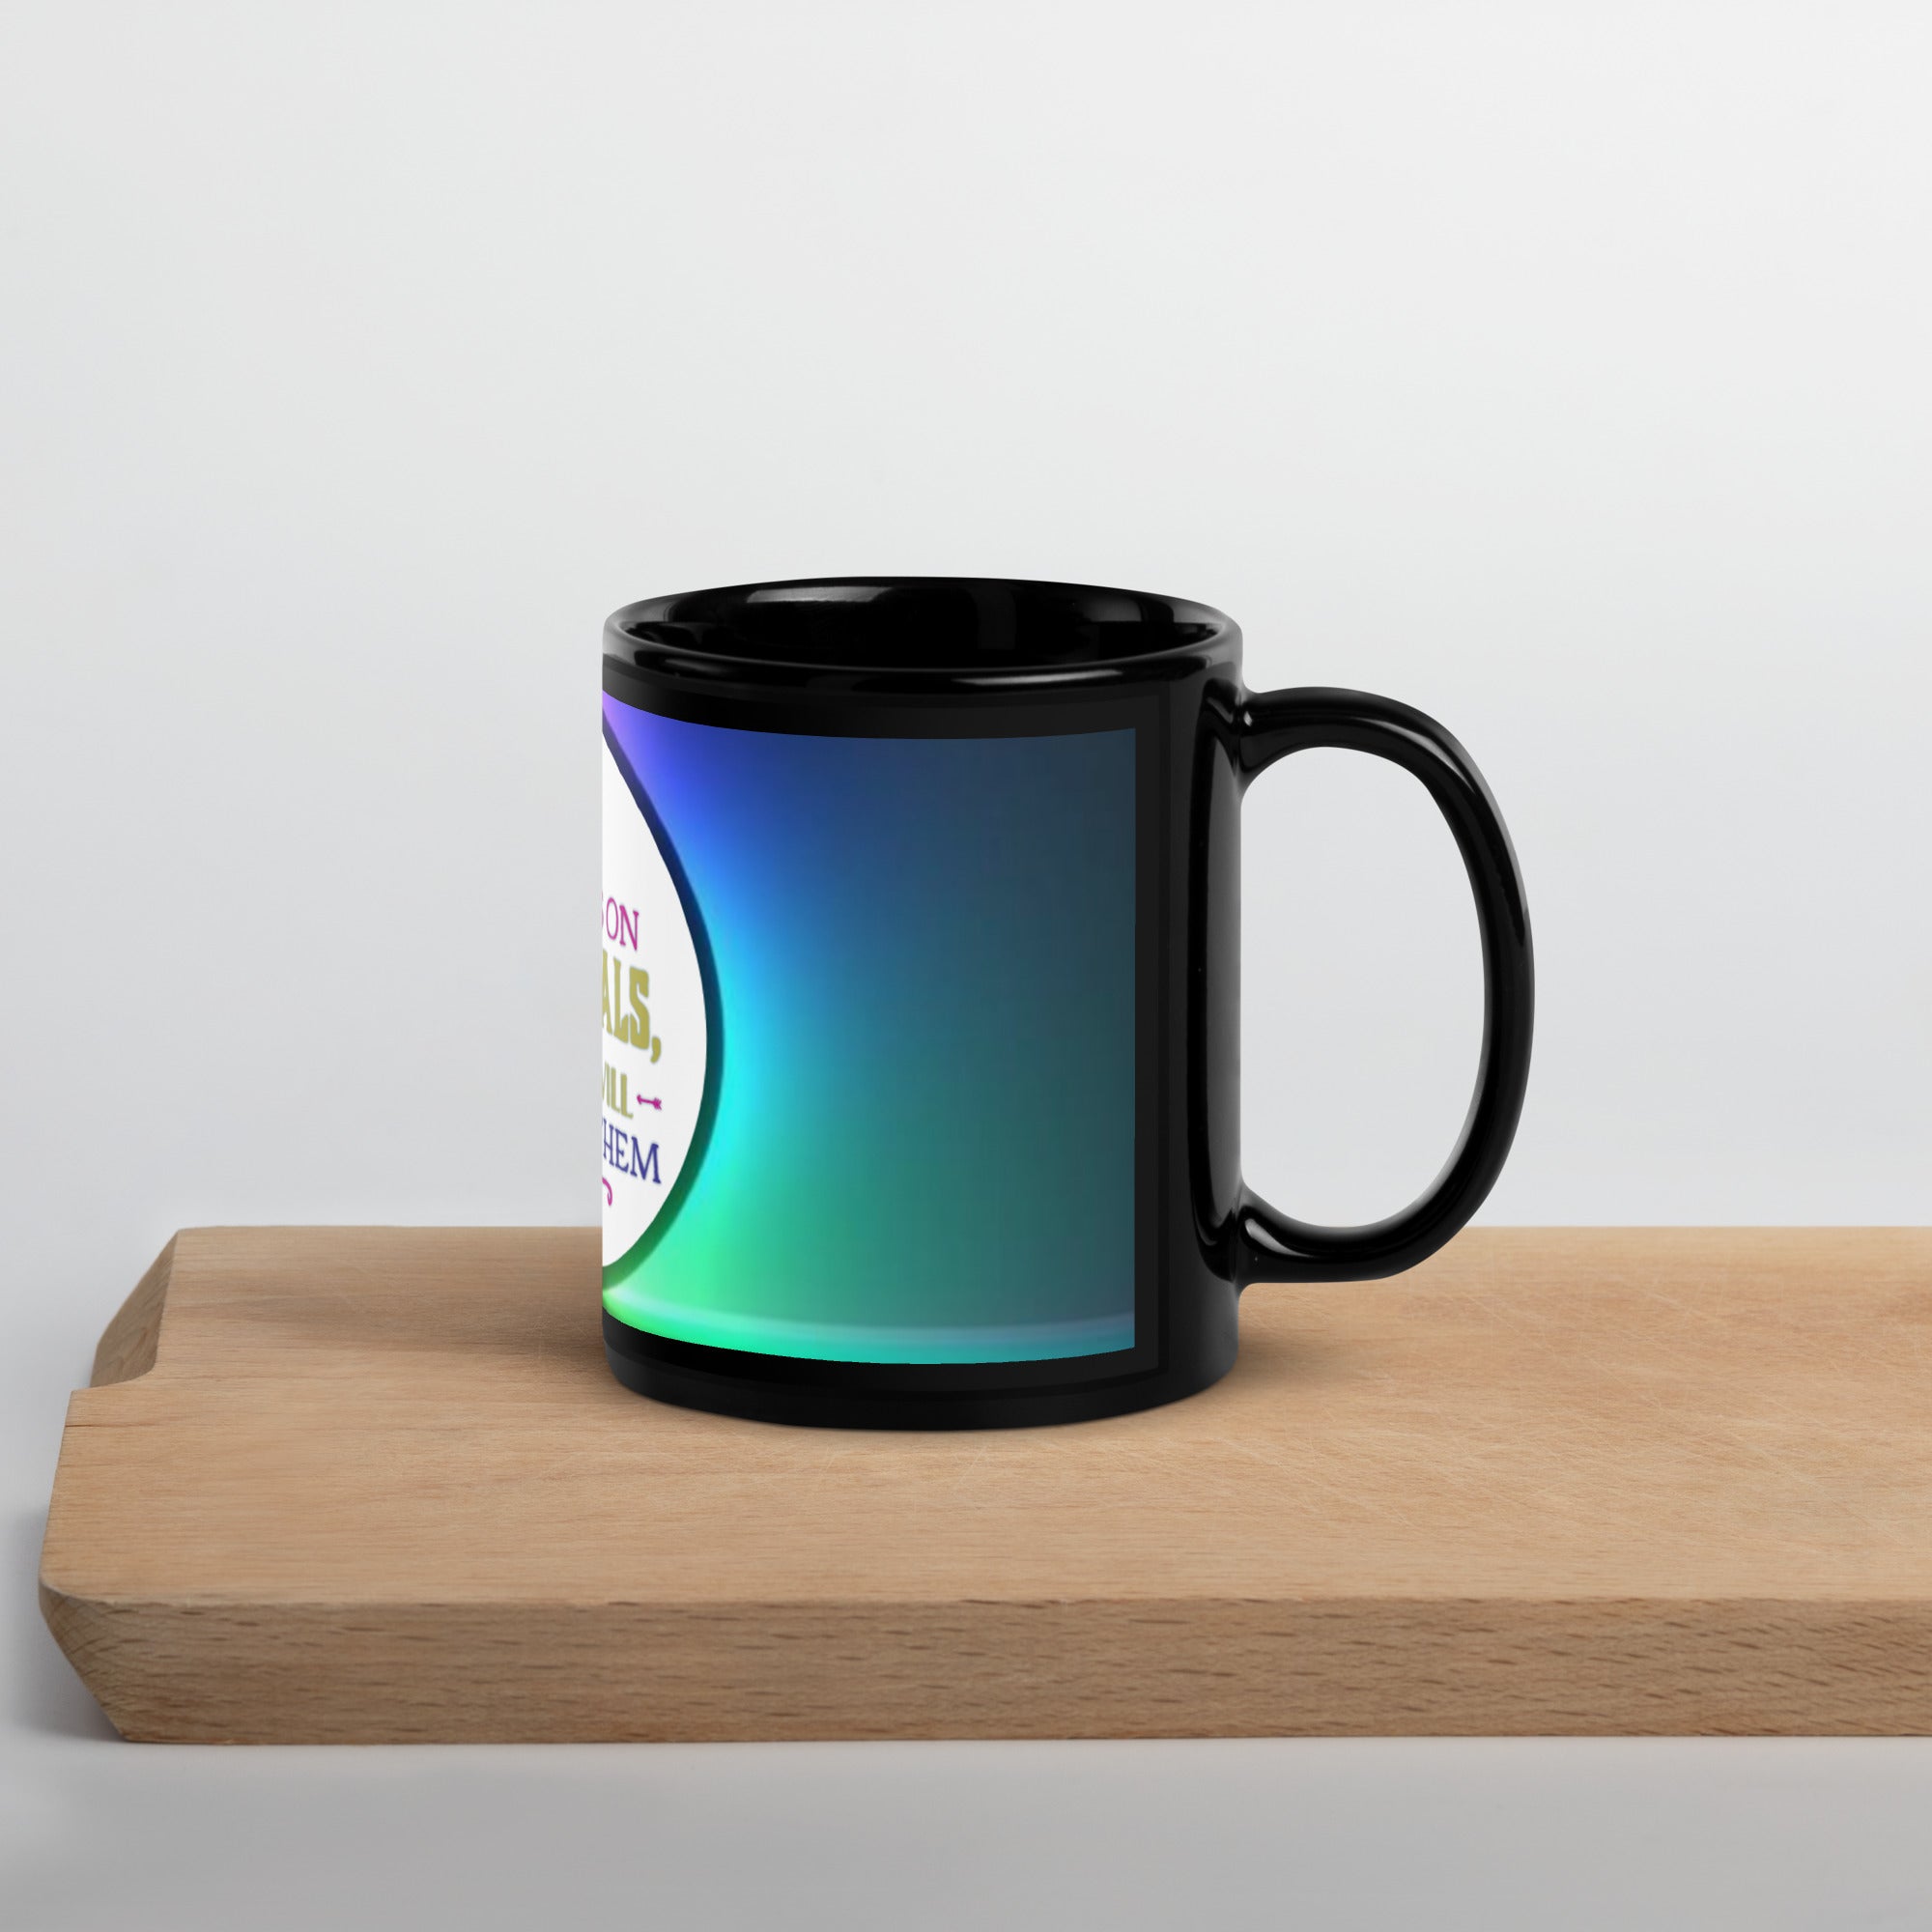 GloWell Designs - Black Glossy Mug - Affirmation Quote - I Focus on My Goals - GloWell Designs